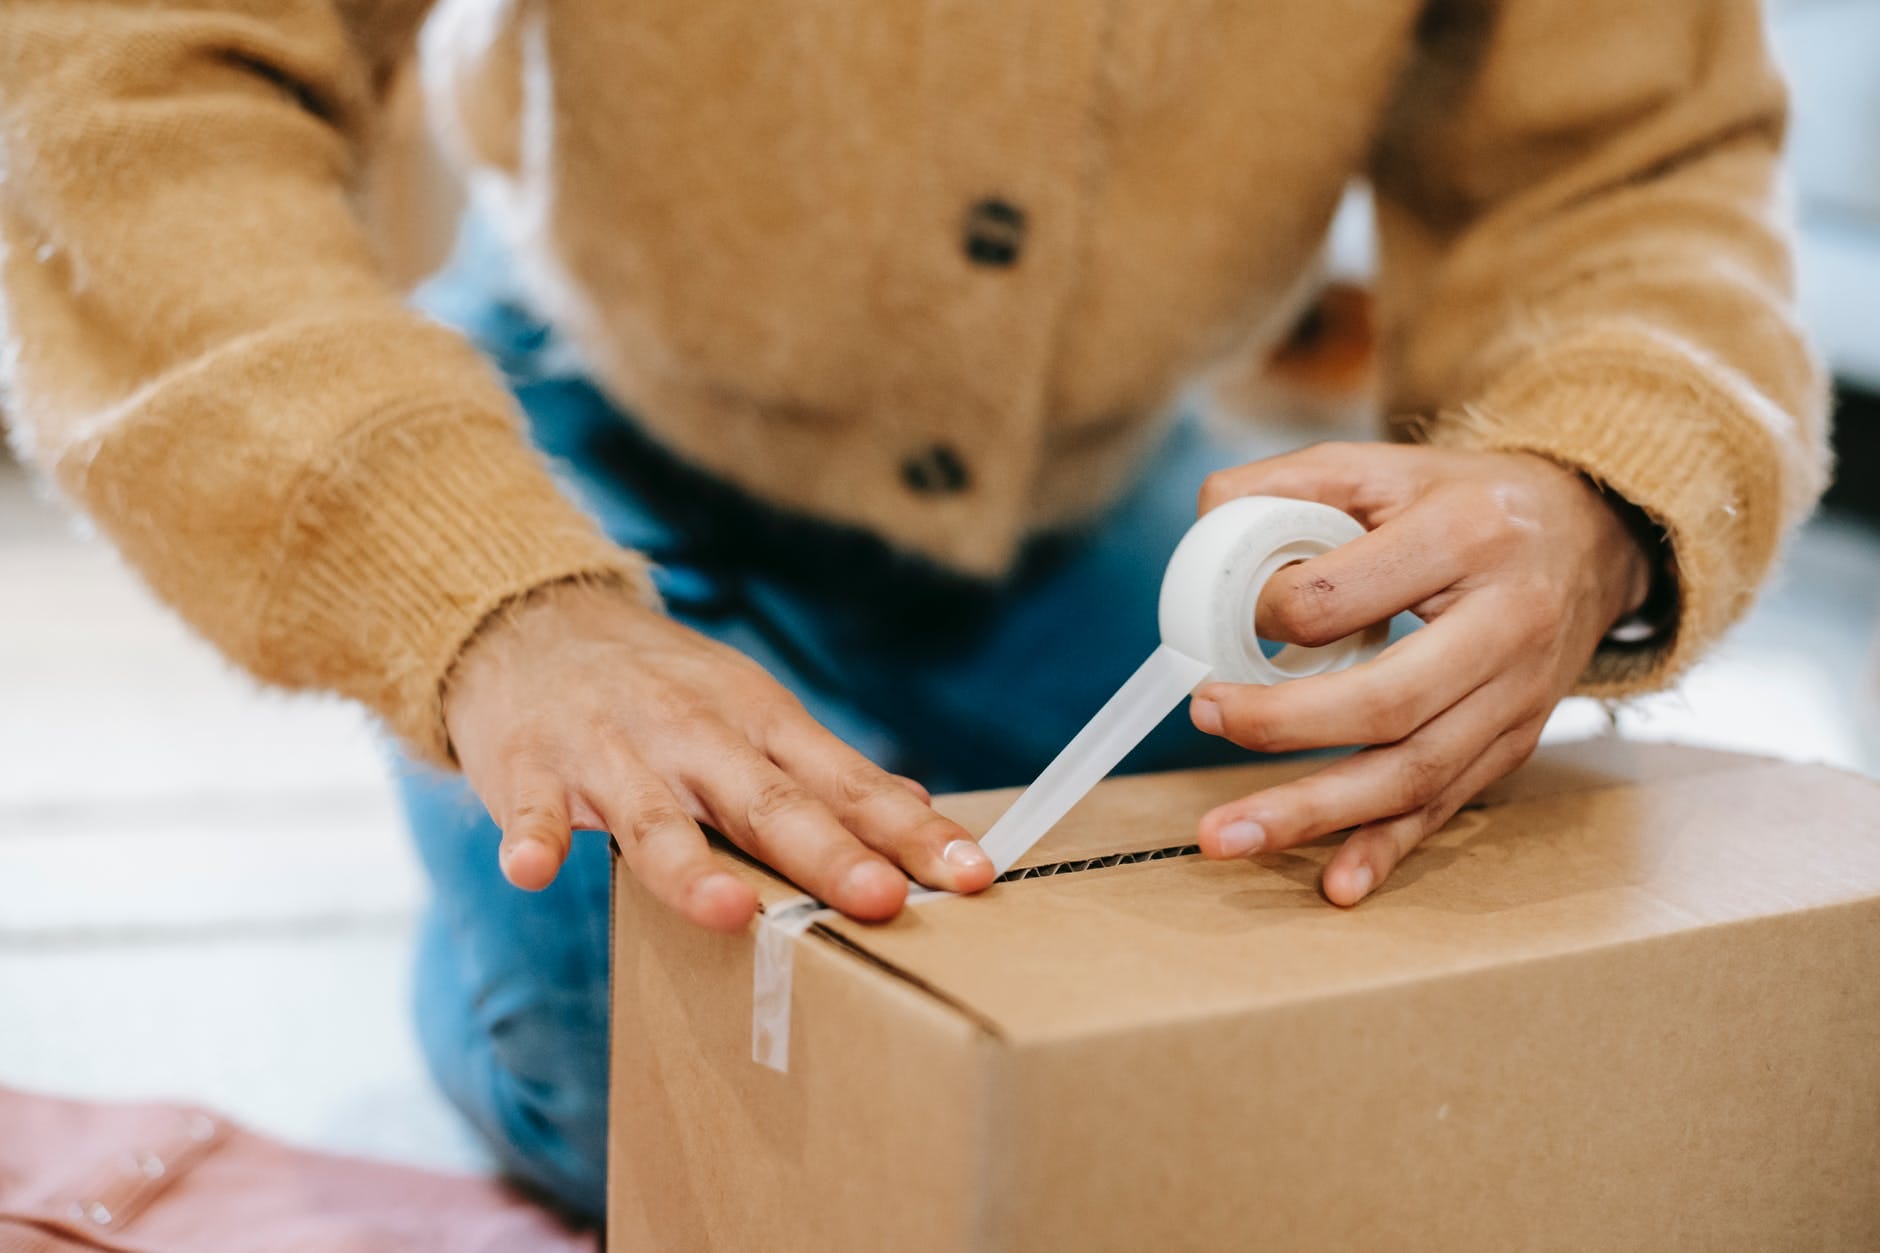 crop unrecognizable woman sealing carton parcel with tape, smart money bro